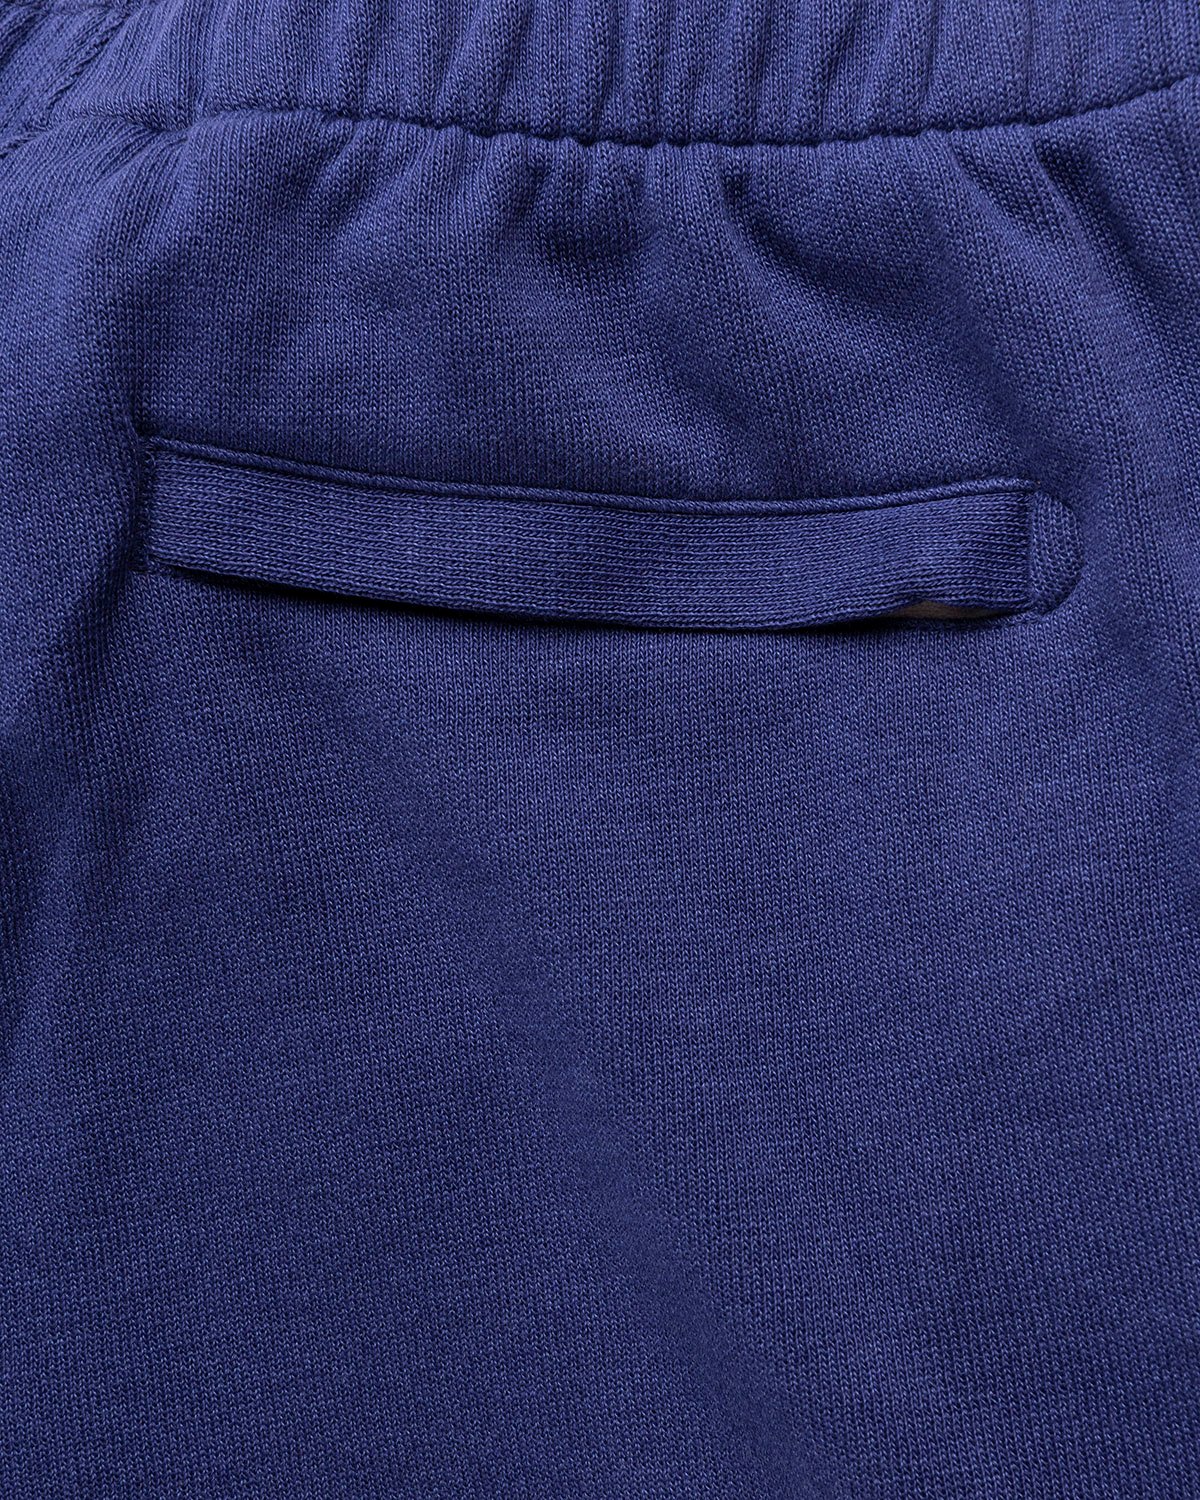 Adidas x Wales Bonner - 80s Track Pants Night Sky - Clothing - Blue - Image 6